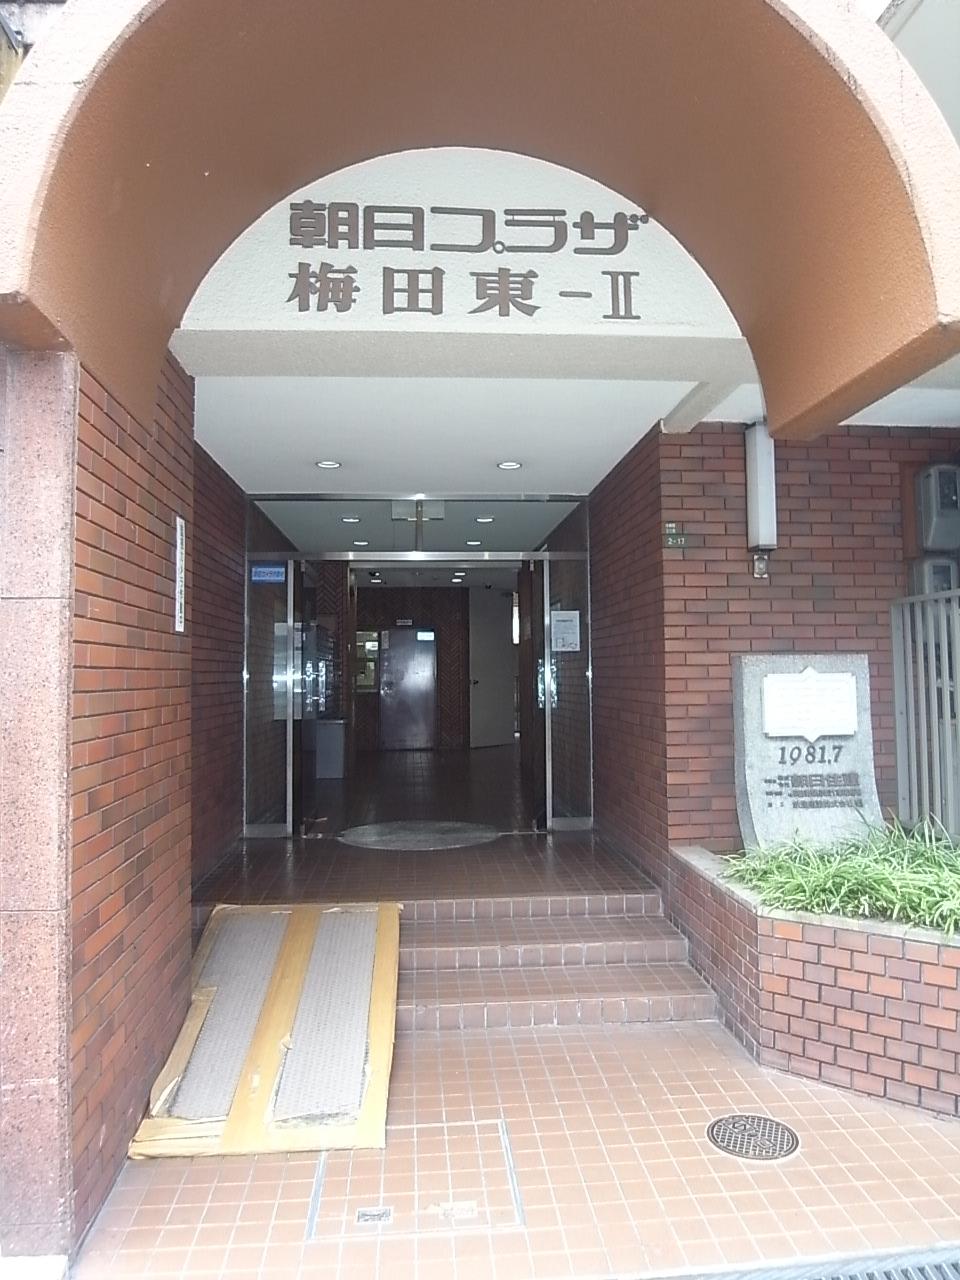 Local appearance photo. Entrance